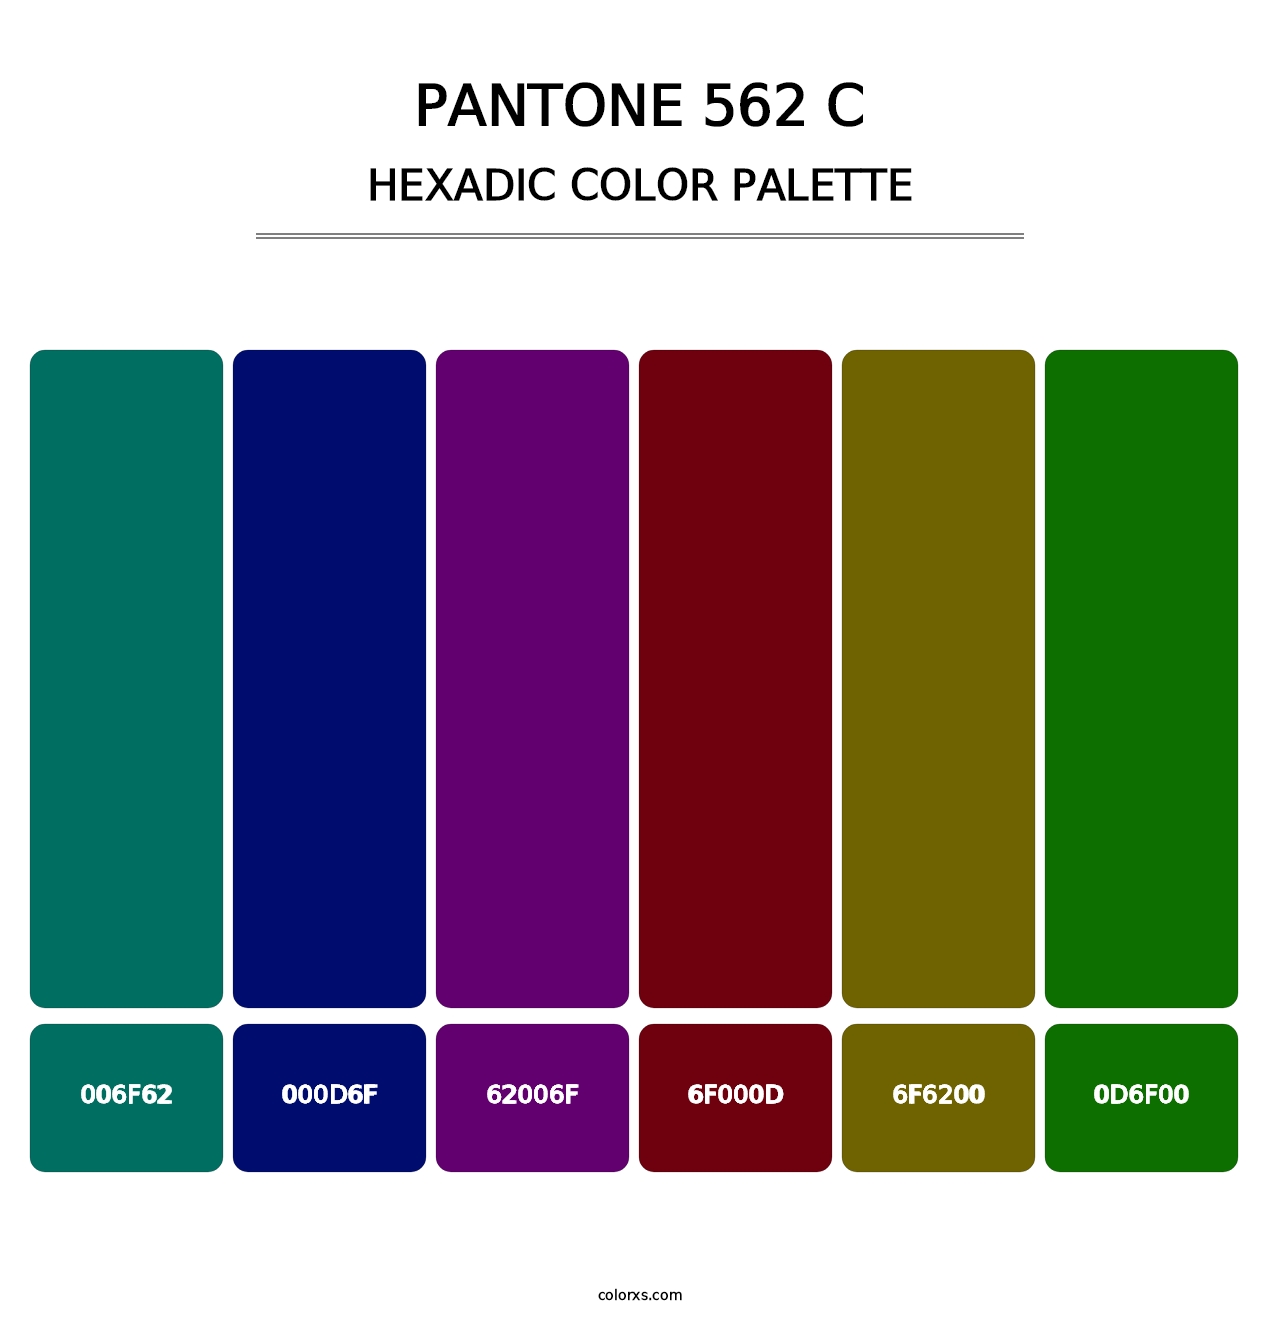 PANTONE 562 C - Hexadic Color Palette